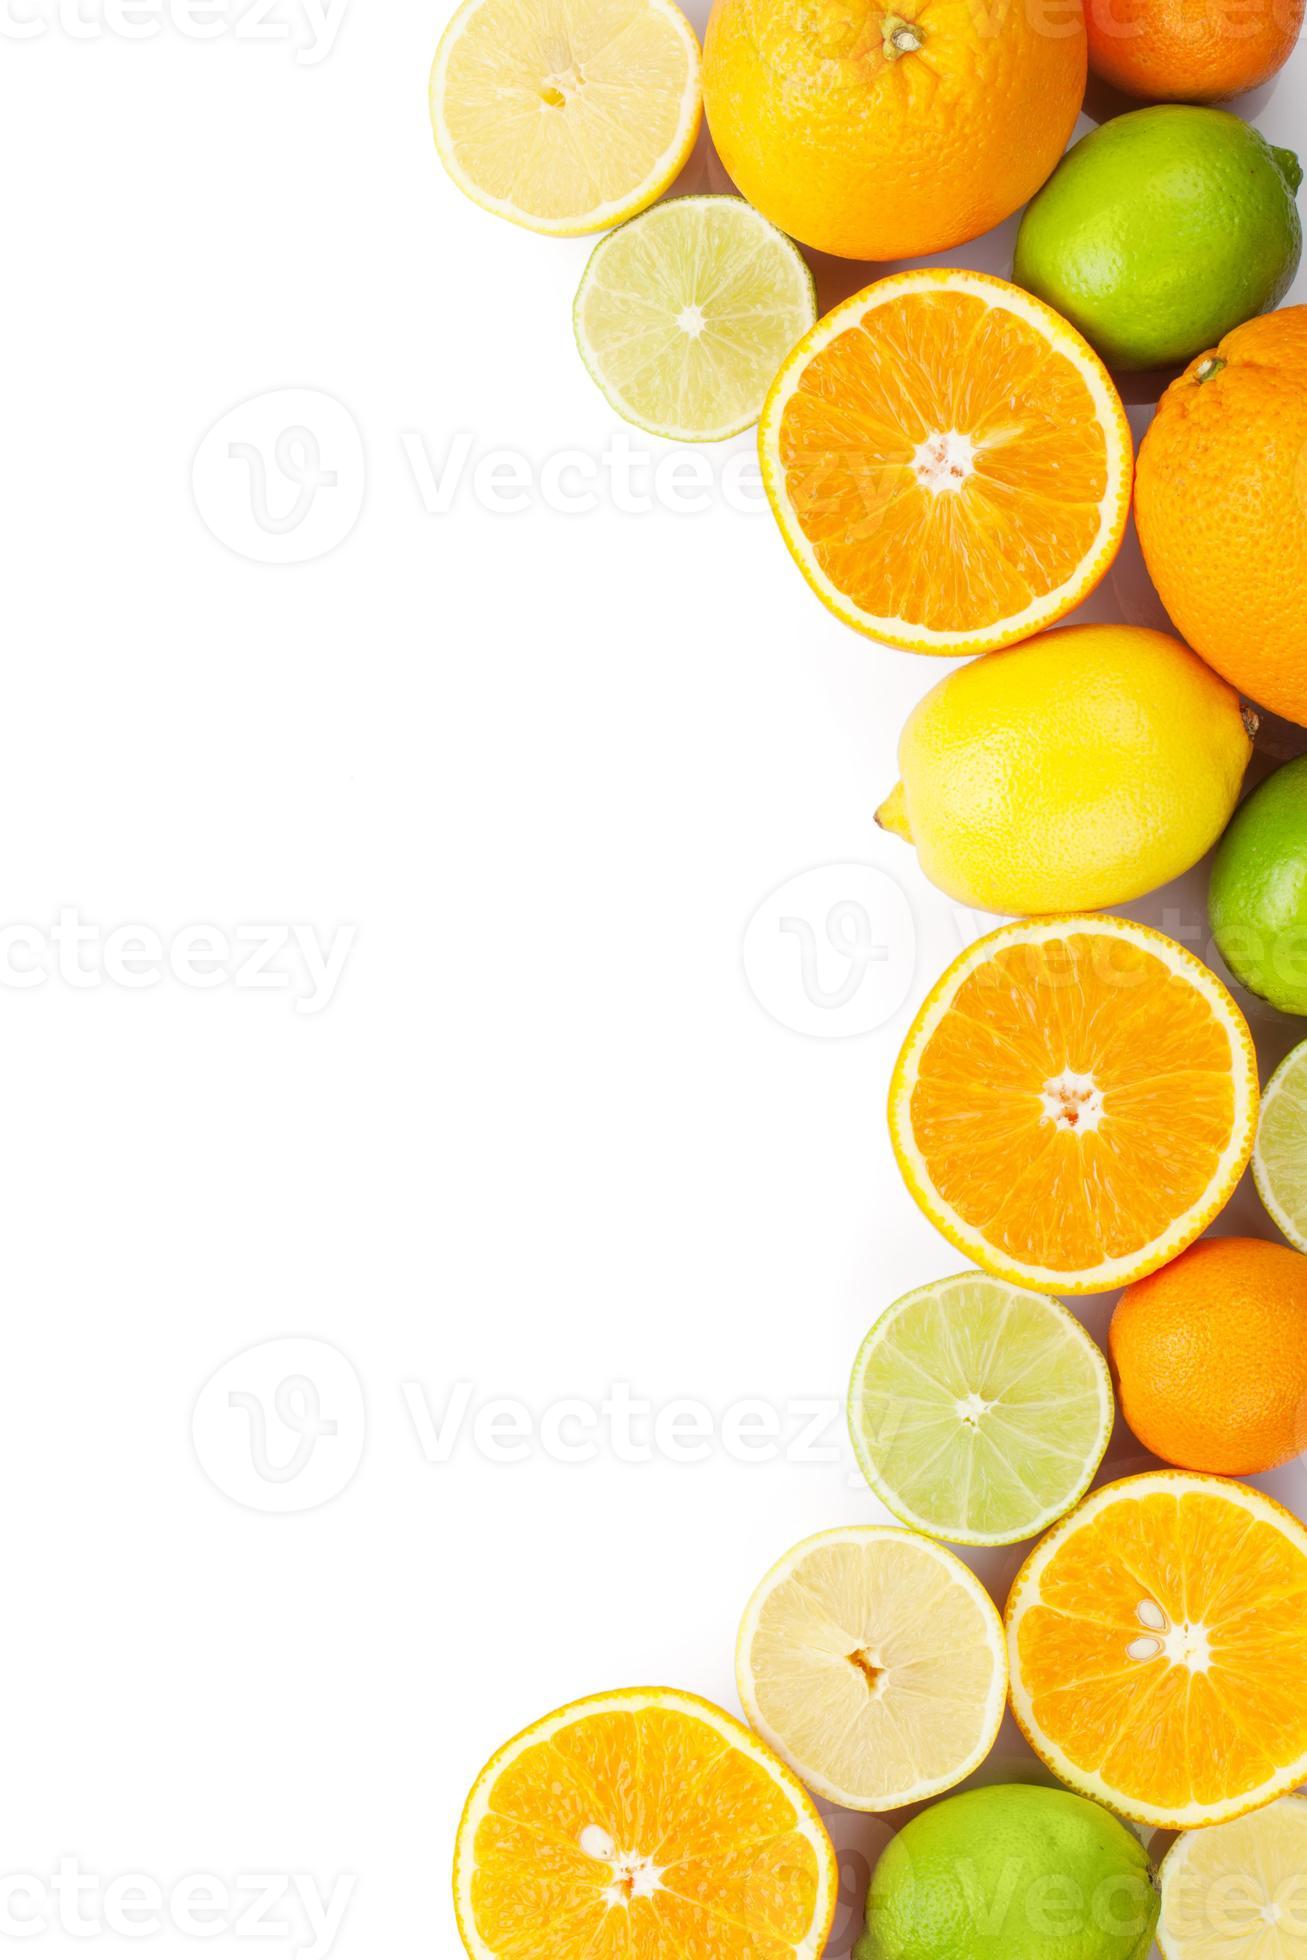 citrus vruchten. sinaasappels, limoenen en citroenen foto